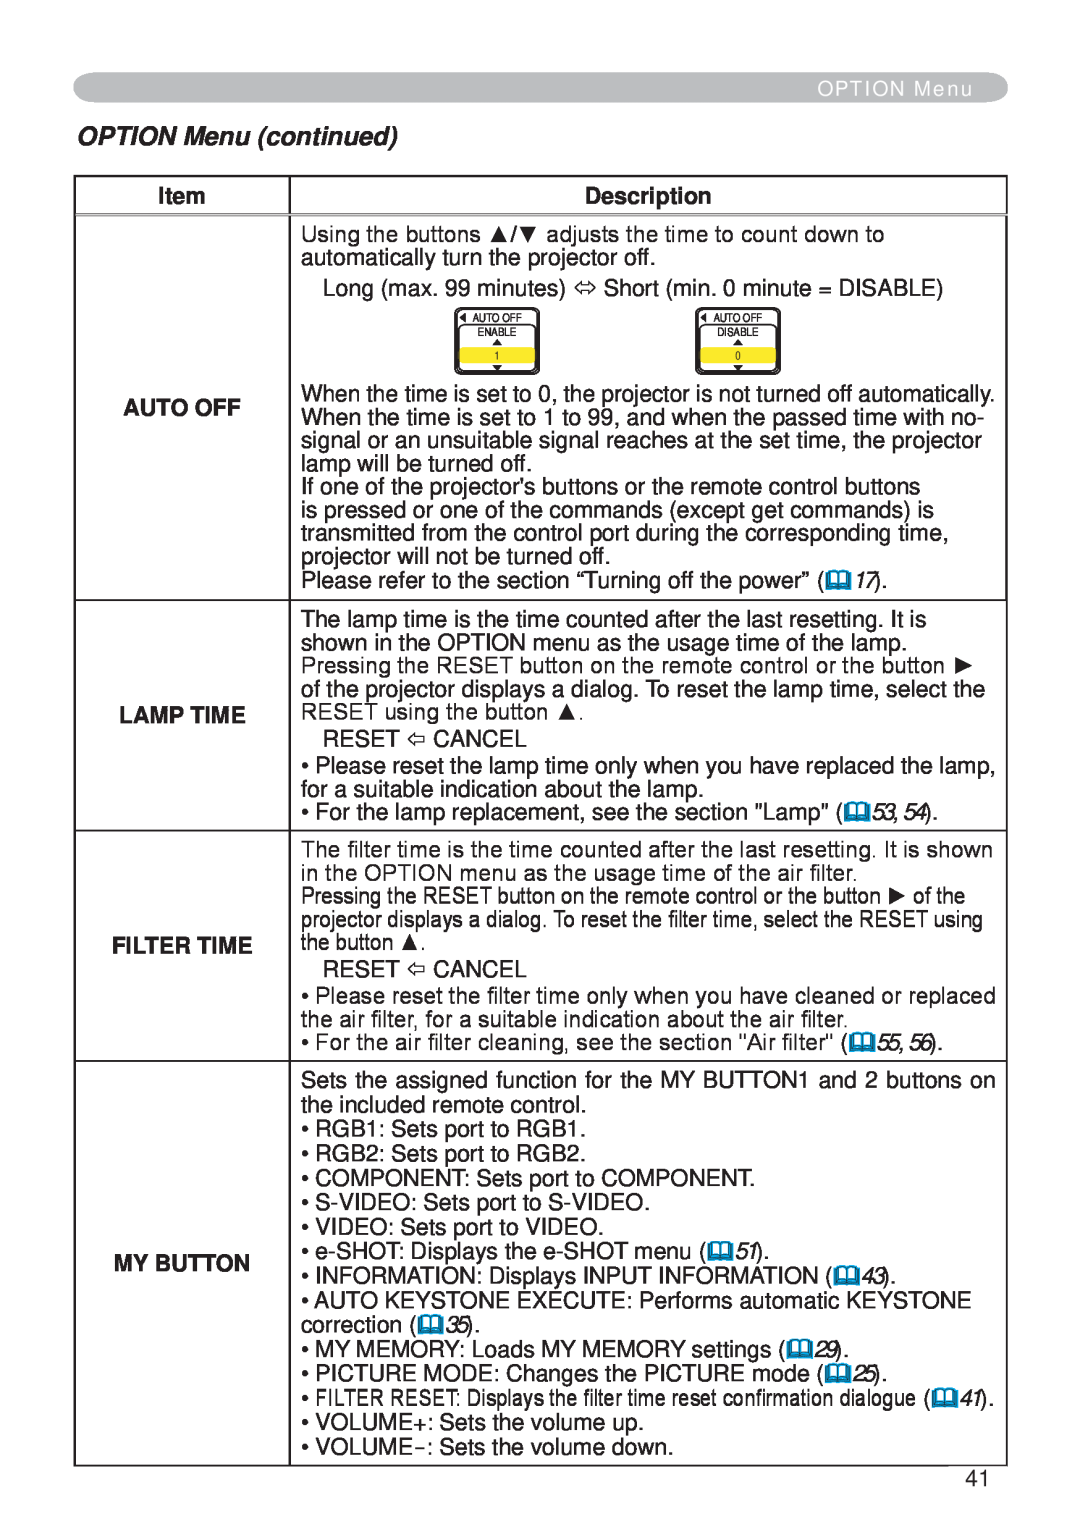 Hitachi CP-X265 user manual OPTION Menu continued, Description, Auto Off, Lamp Time, Filter Time, My Button 